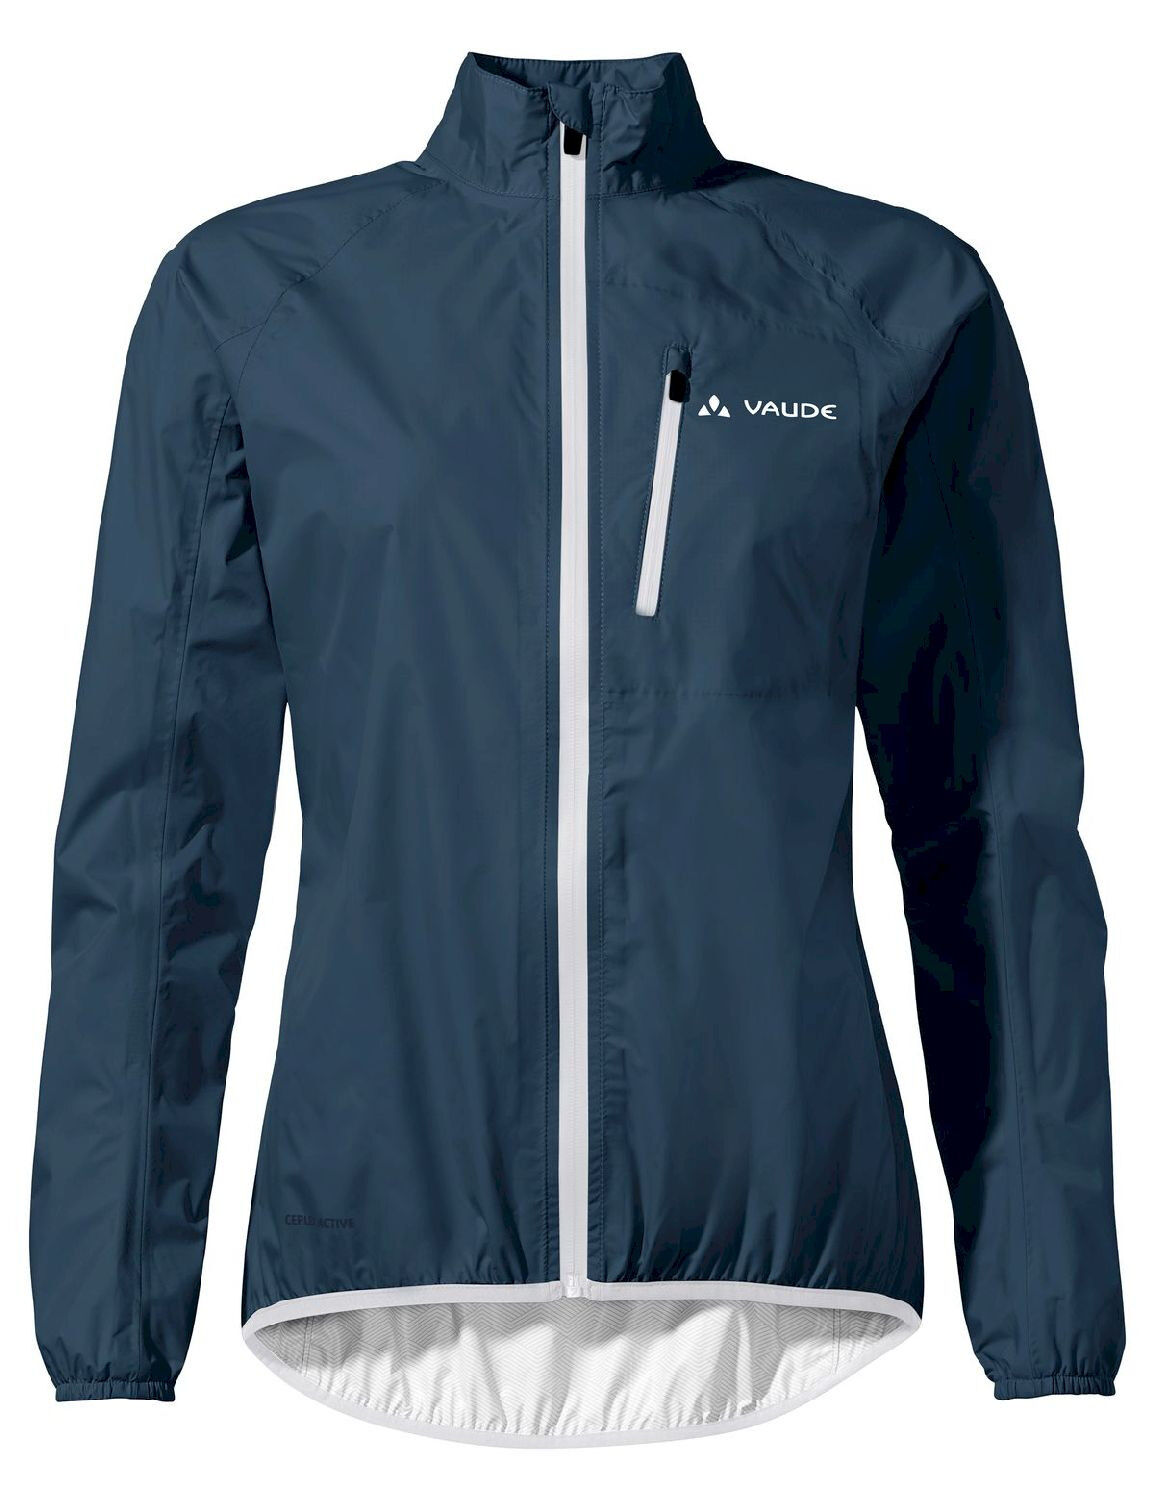 Vaude Drop Jacket III - Cycling jacket - Women's